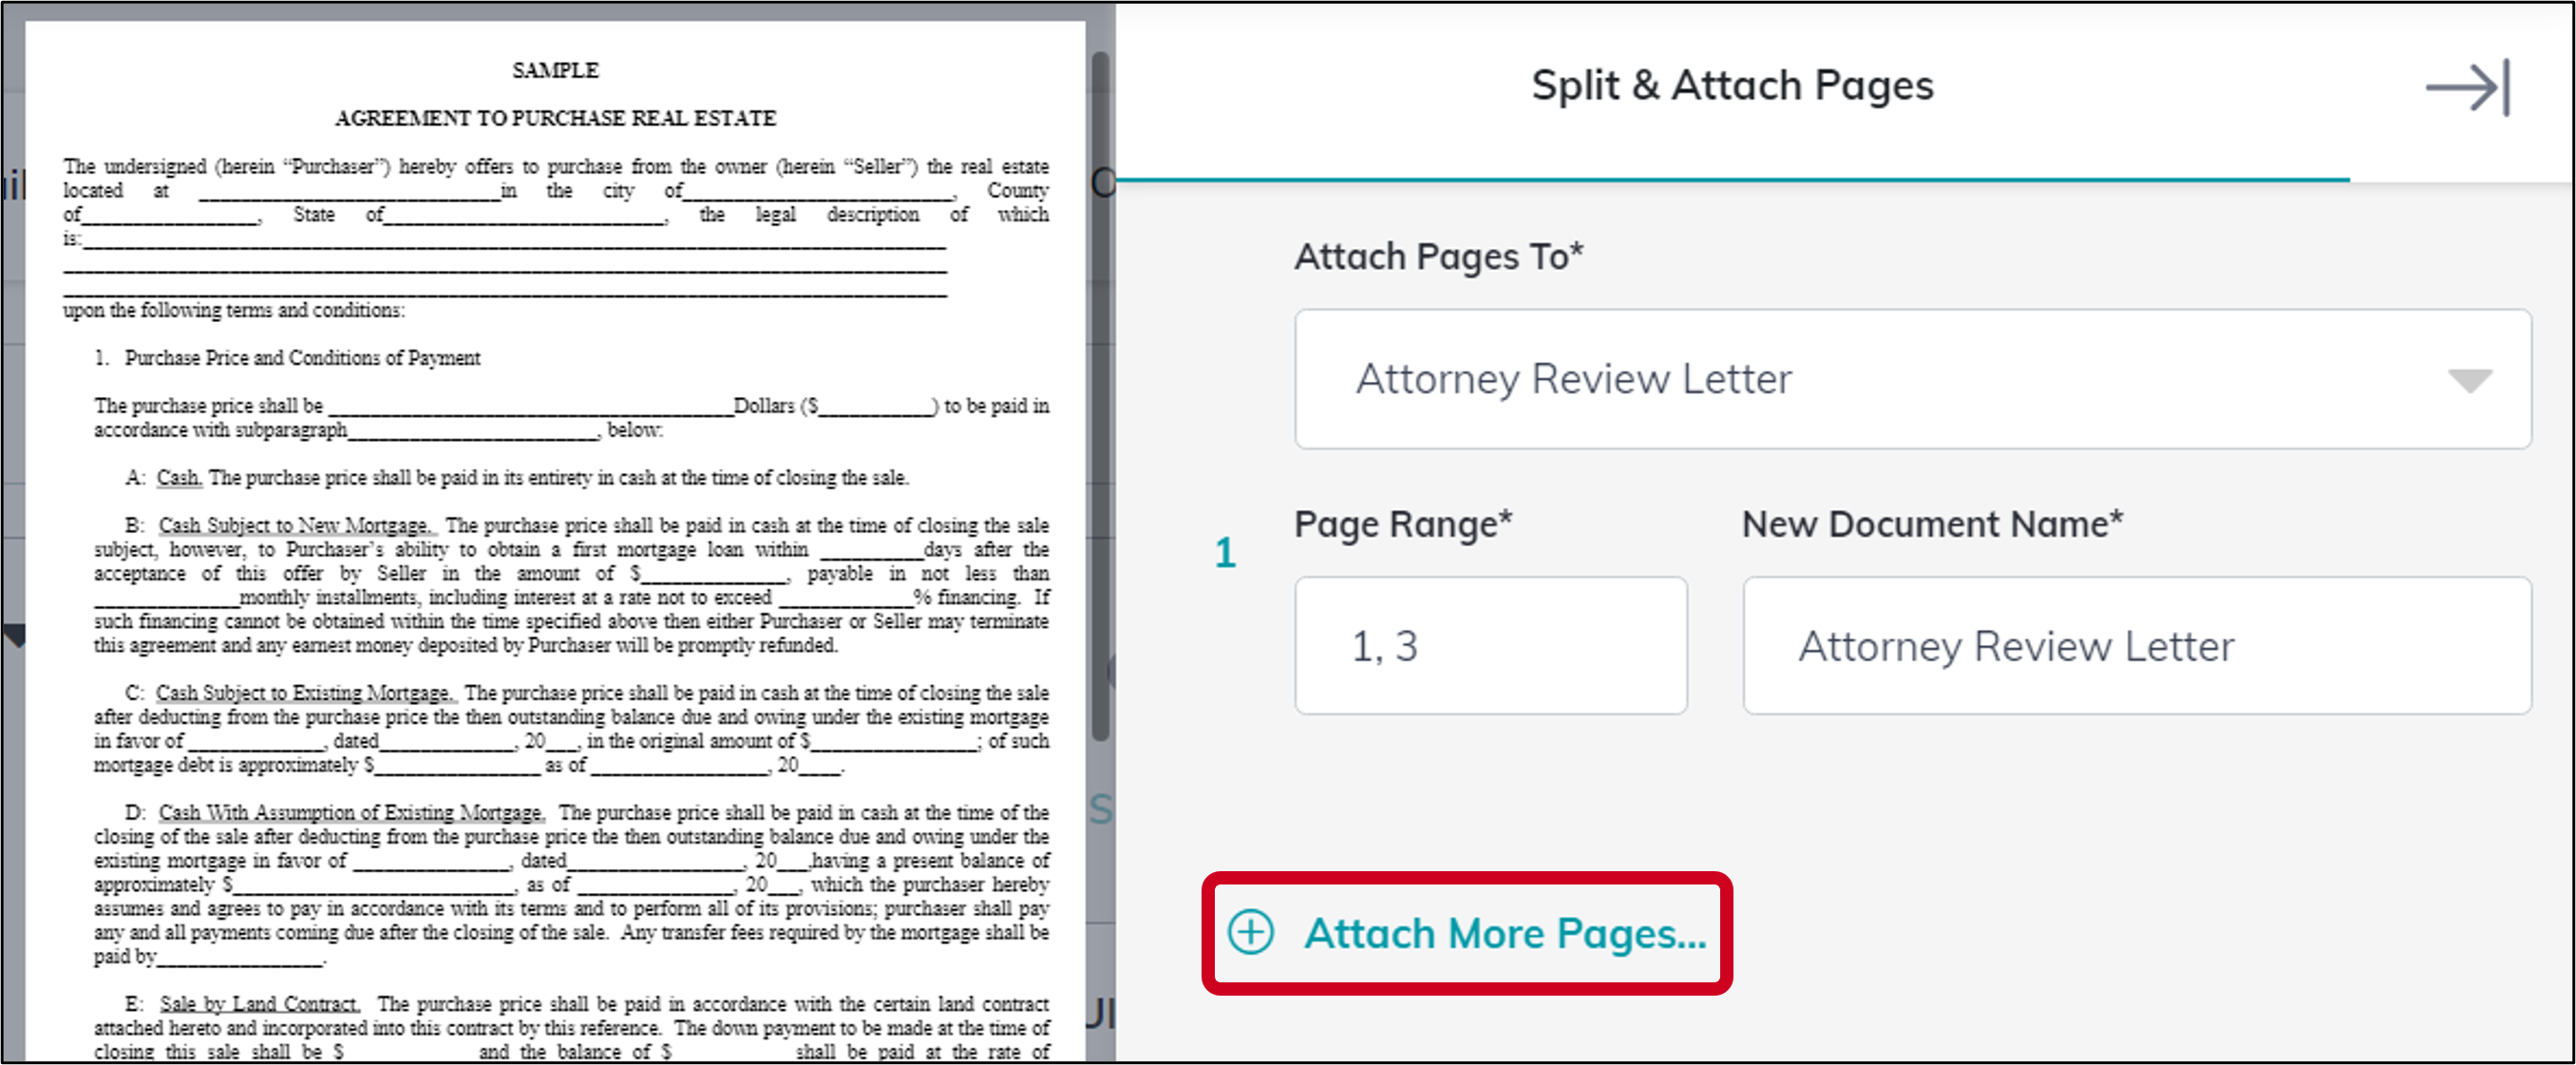 compliance_split_attach_more_pages.png